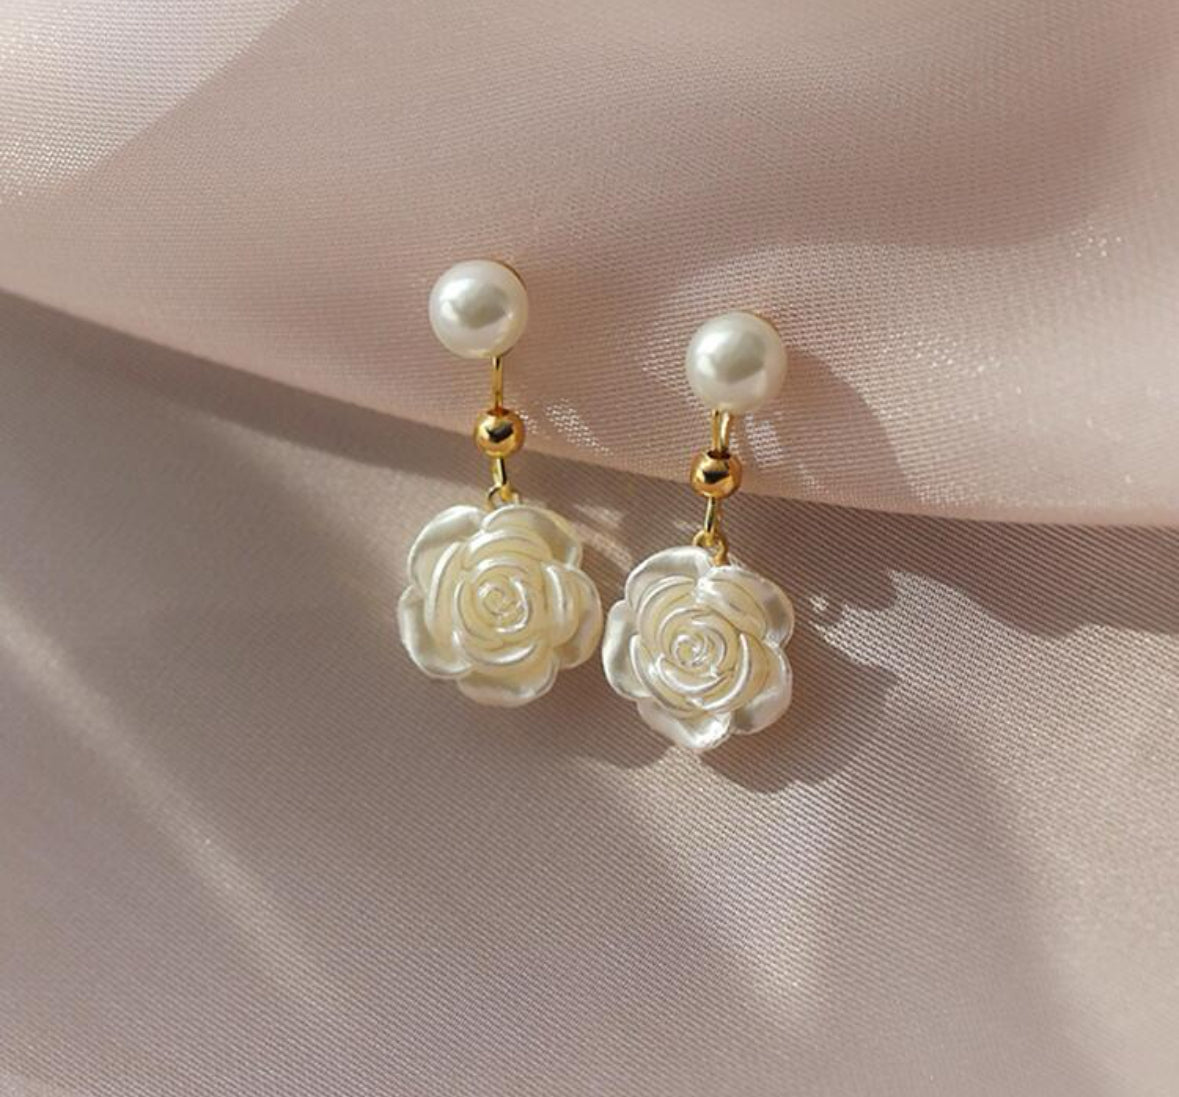 White rose pearl drop earrings